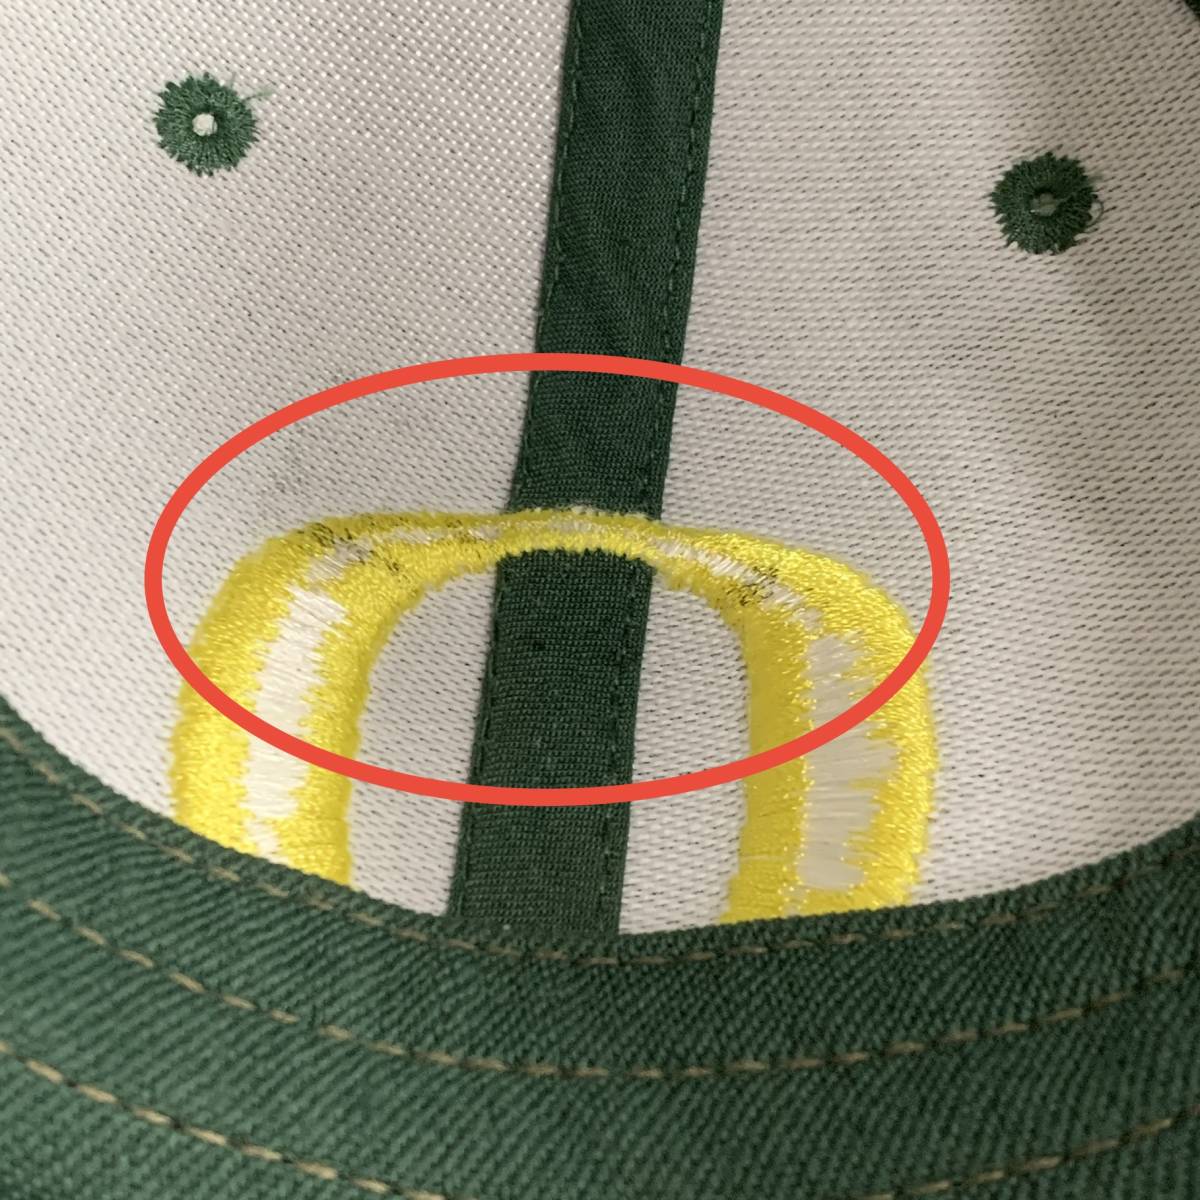 ☆NIKE ナイキ LEGACY91 DRI-FIT オレゴン大学ダックス NCAA 刺繍ロゴキャップ 帽子 グリーン×イエロー×ホワイト M【送料一律/同梱可能】_内側の刺繍部分にシミがあります